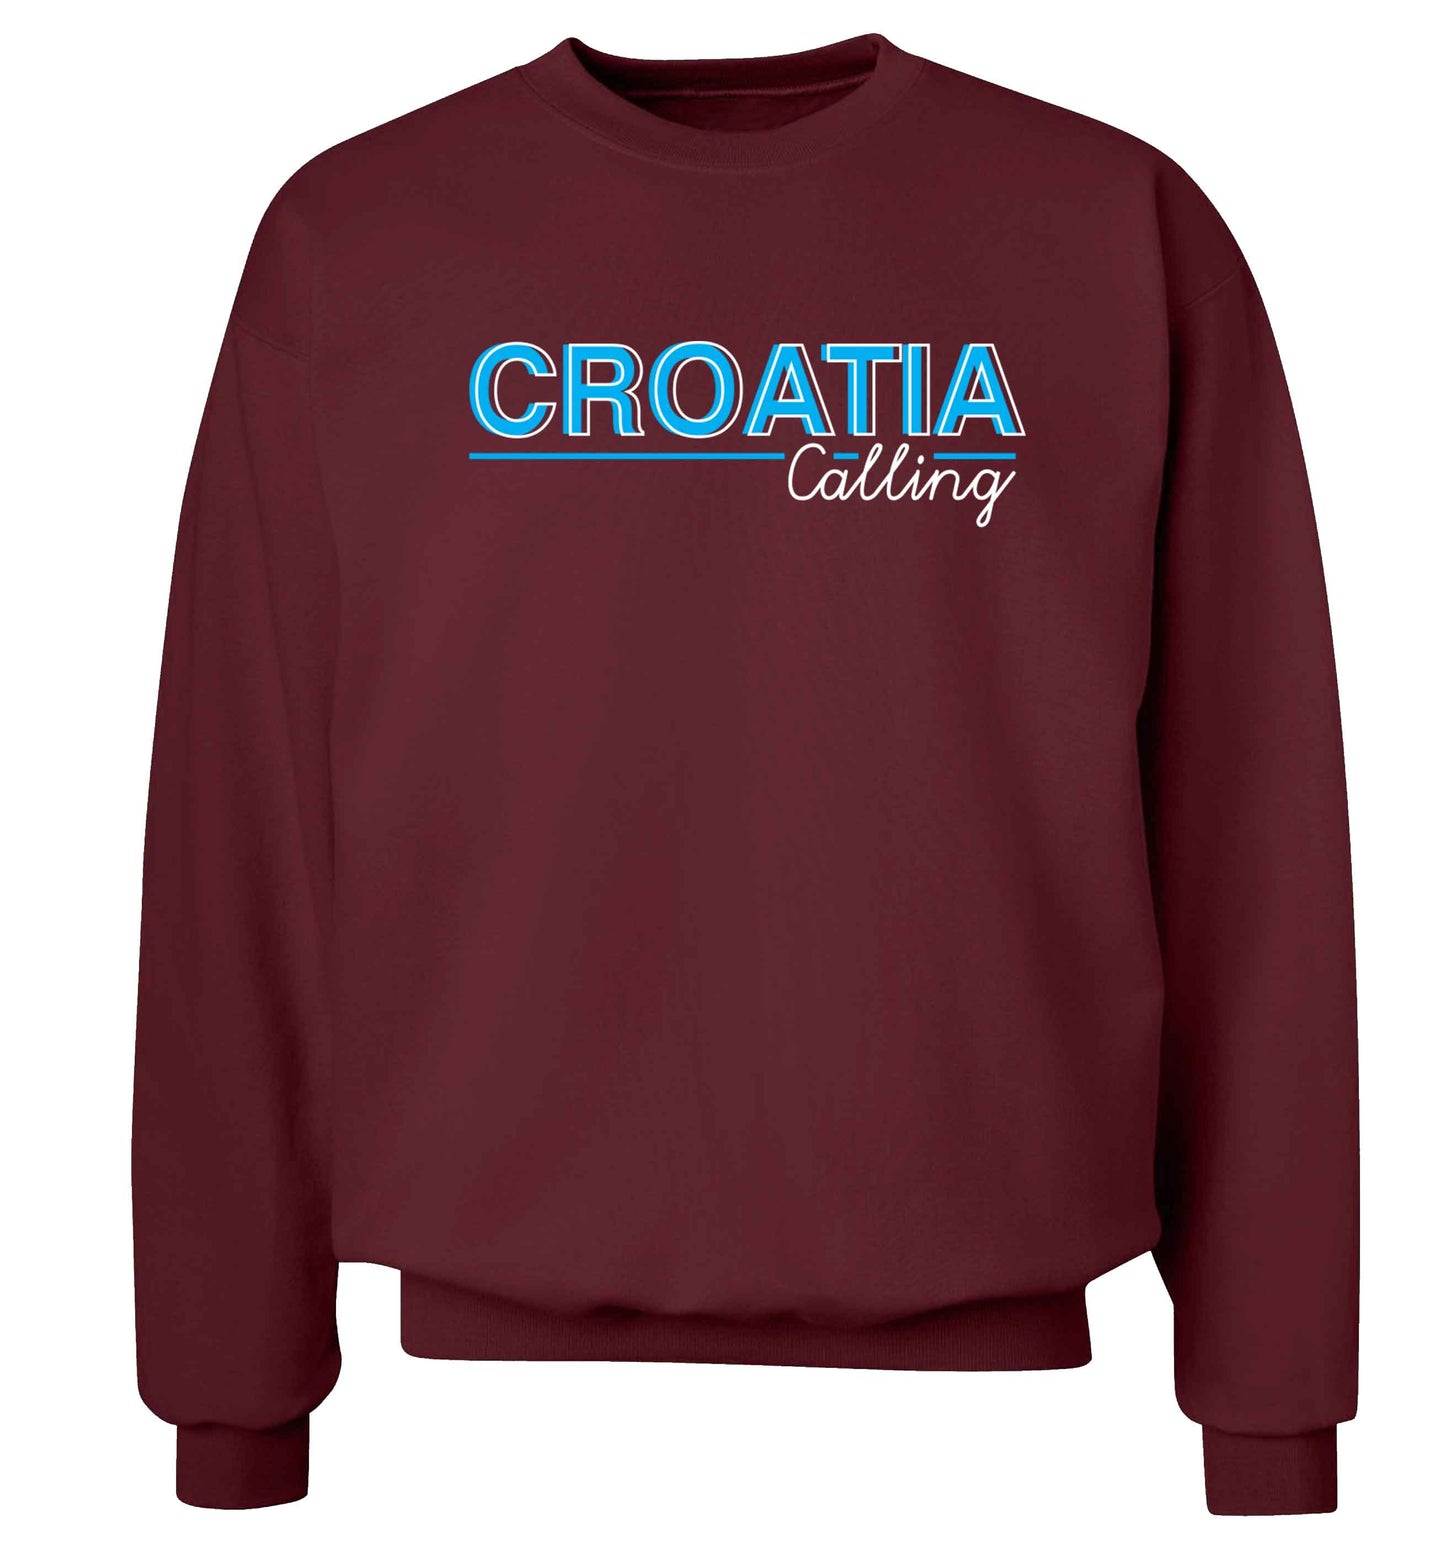 Croatia calling Adult's unisex maroon Sweater 2XL